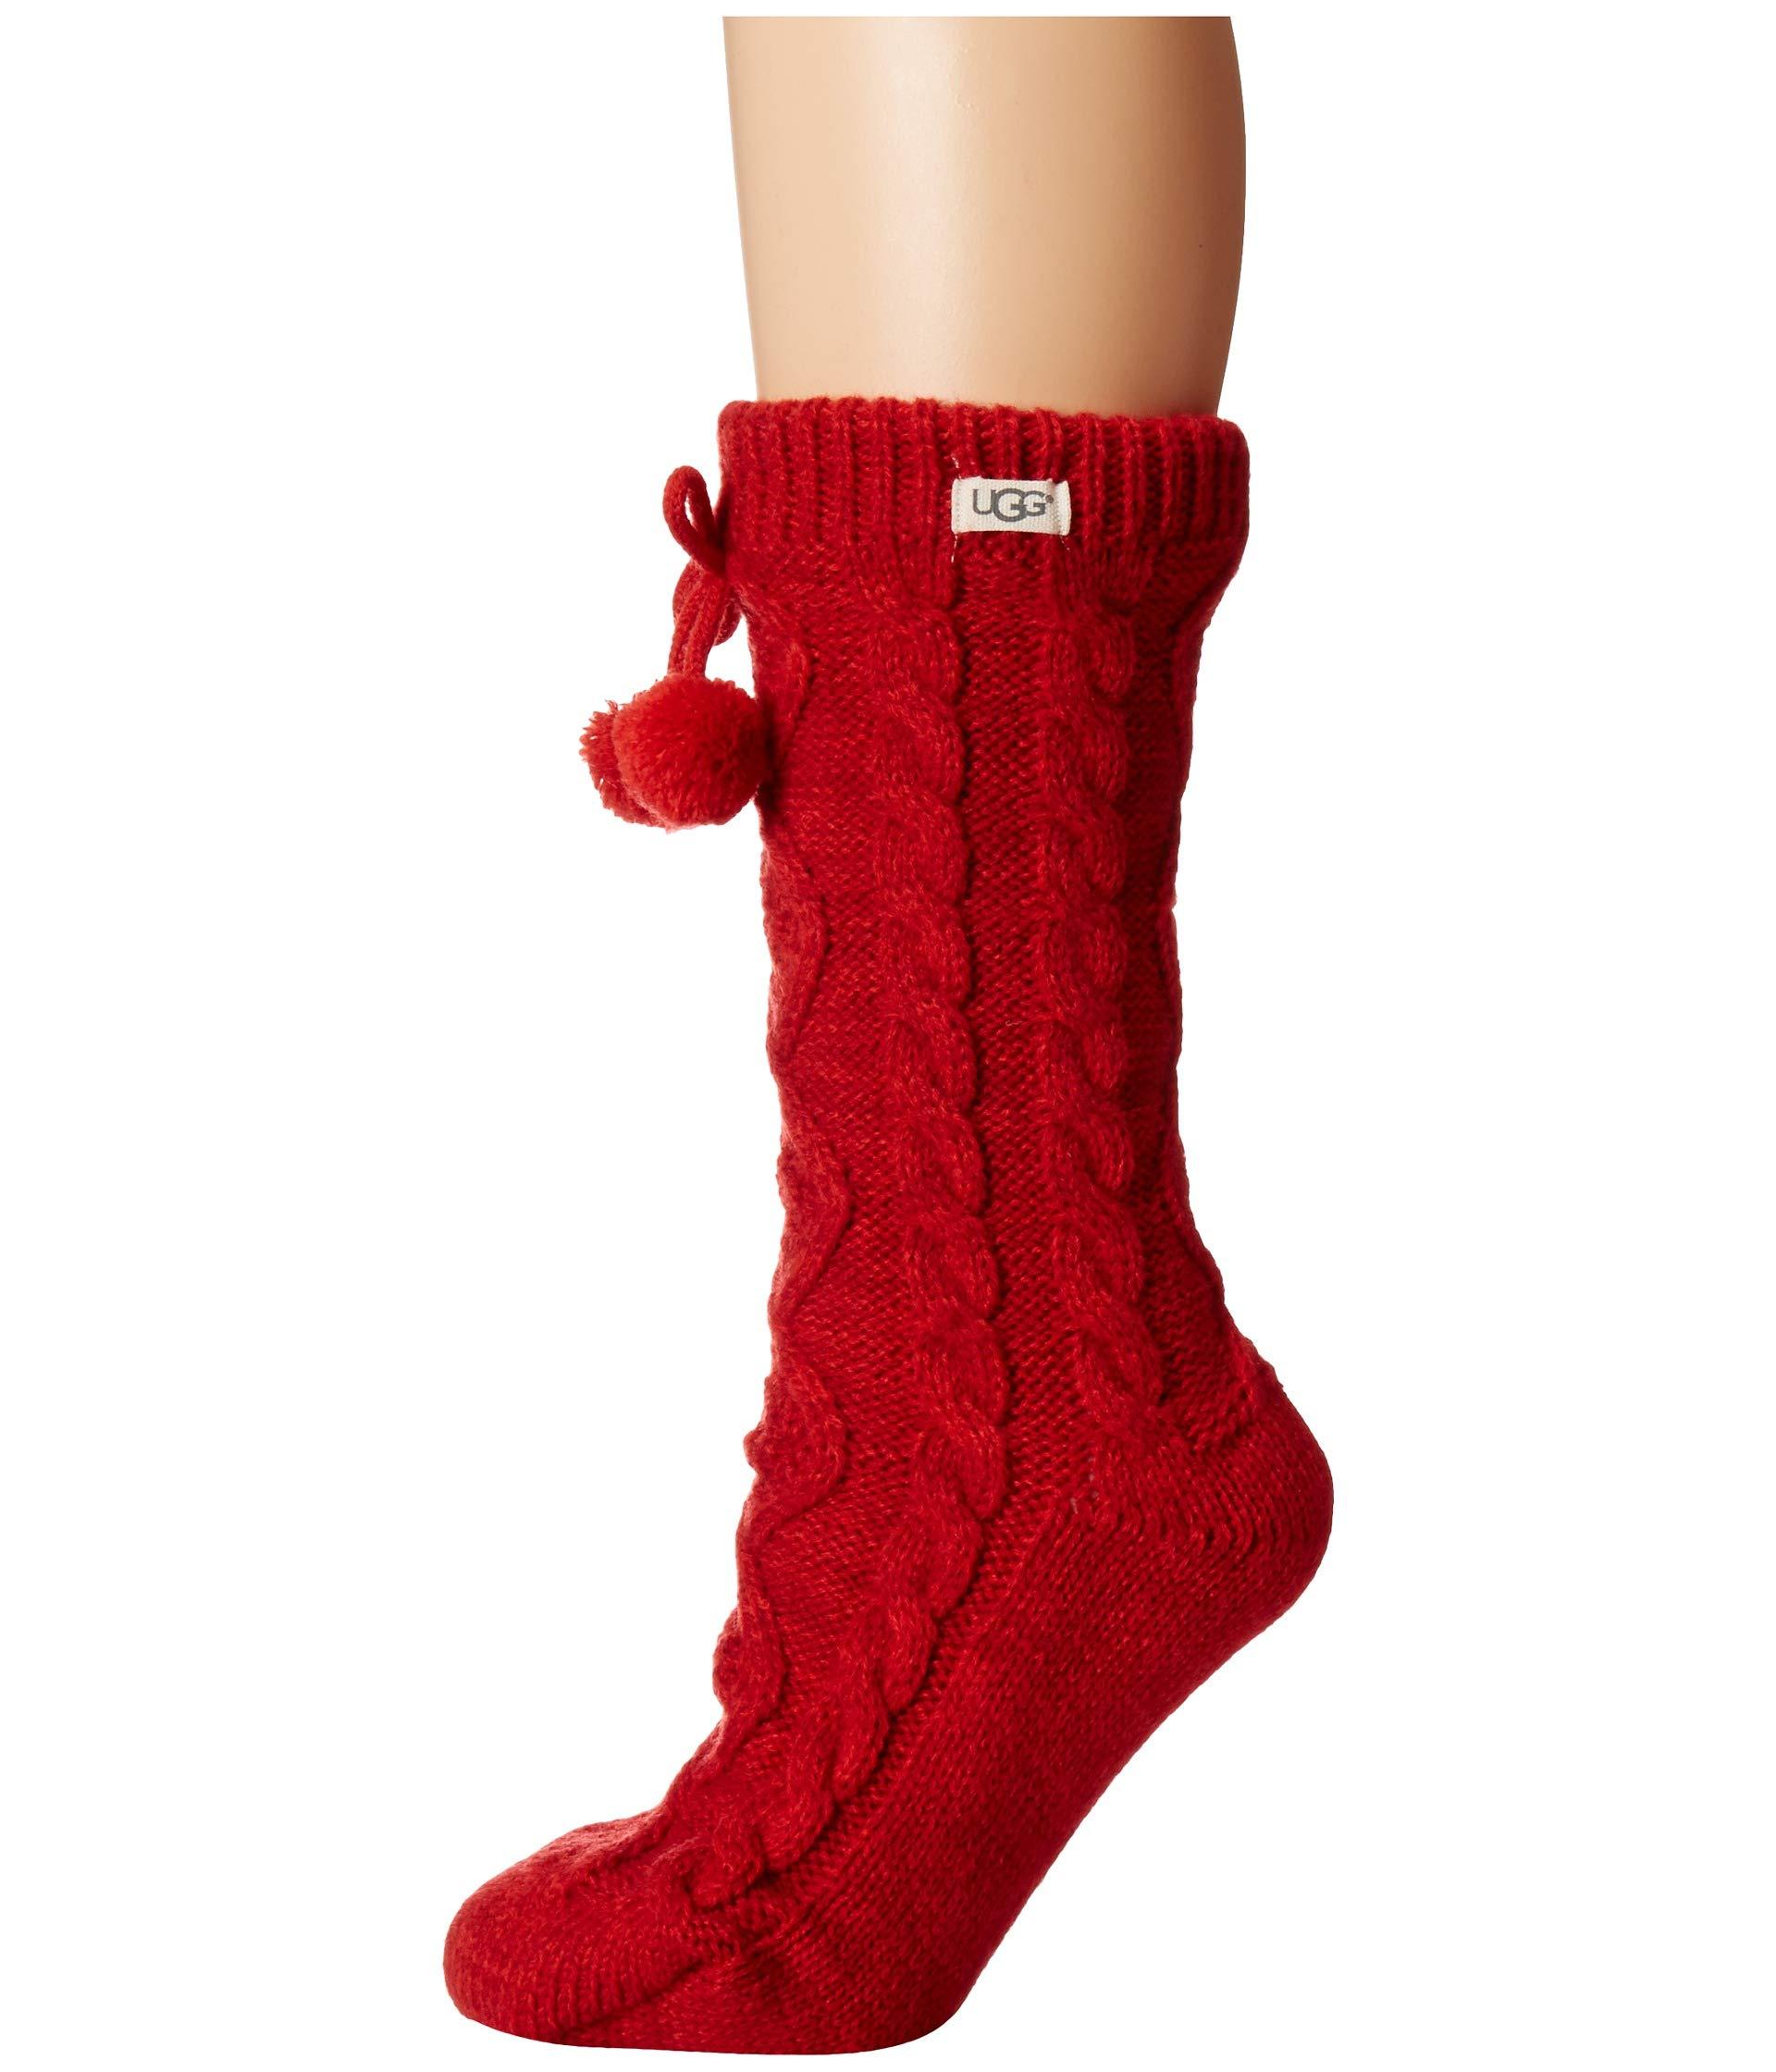 UGG Pom Pom Fleece Lined Crew Sock in Poppy Red (Red) - Lyst